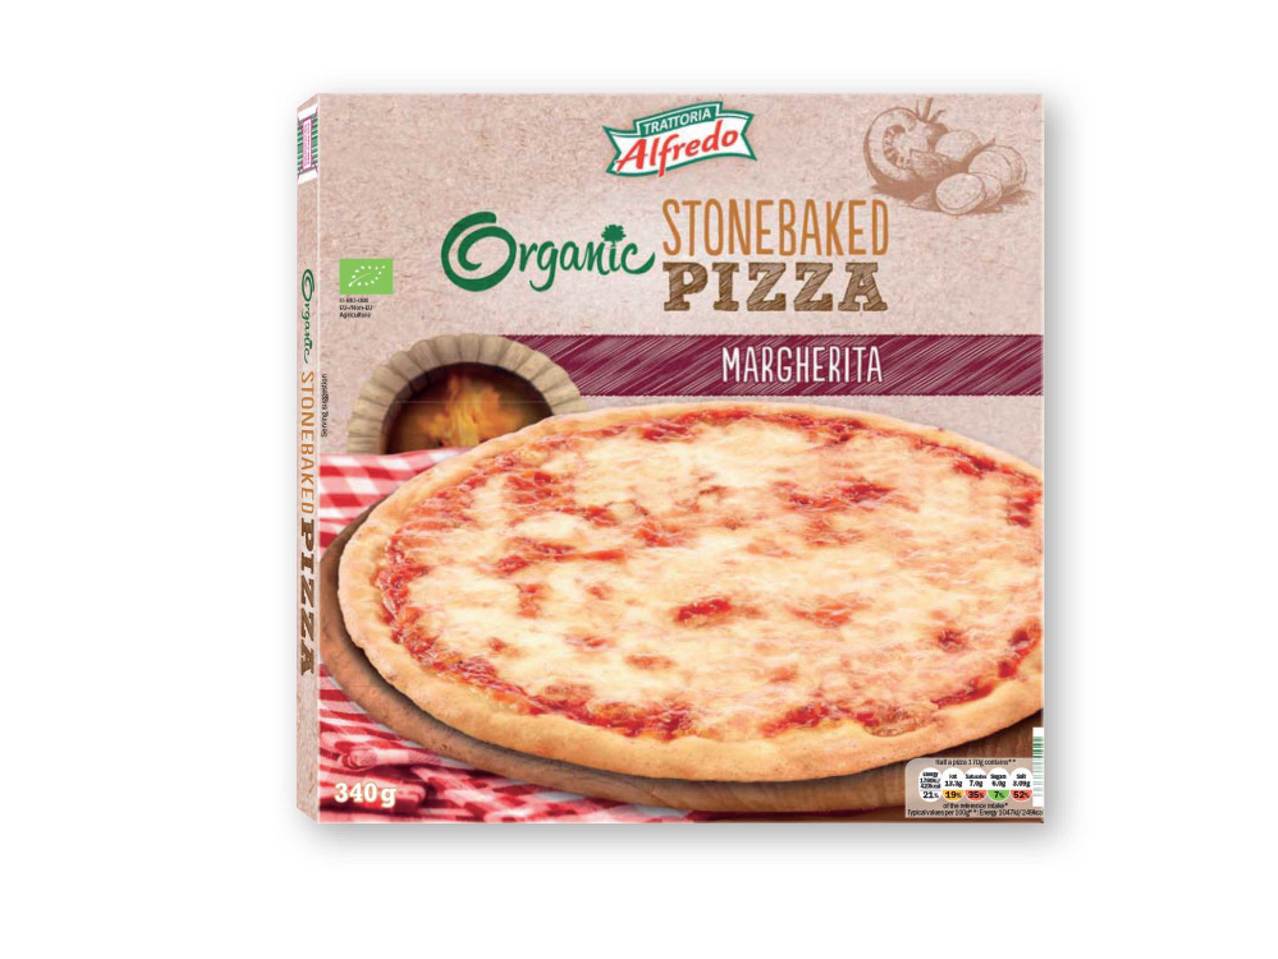 TRATTORIA ALFREDO(R) Organic Stonebaked Margherita Pizza